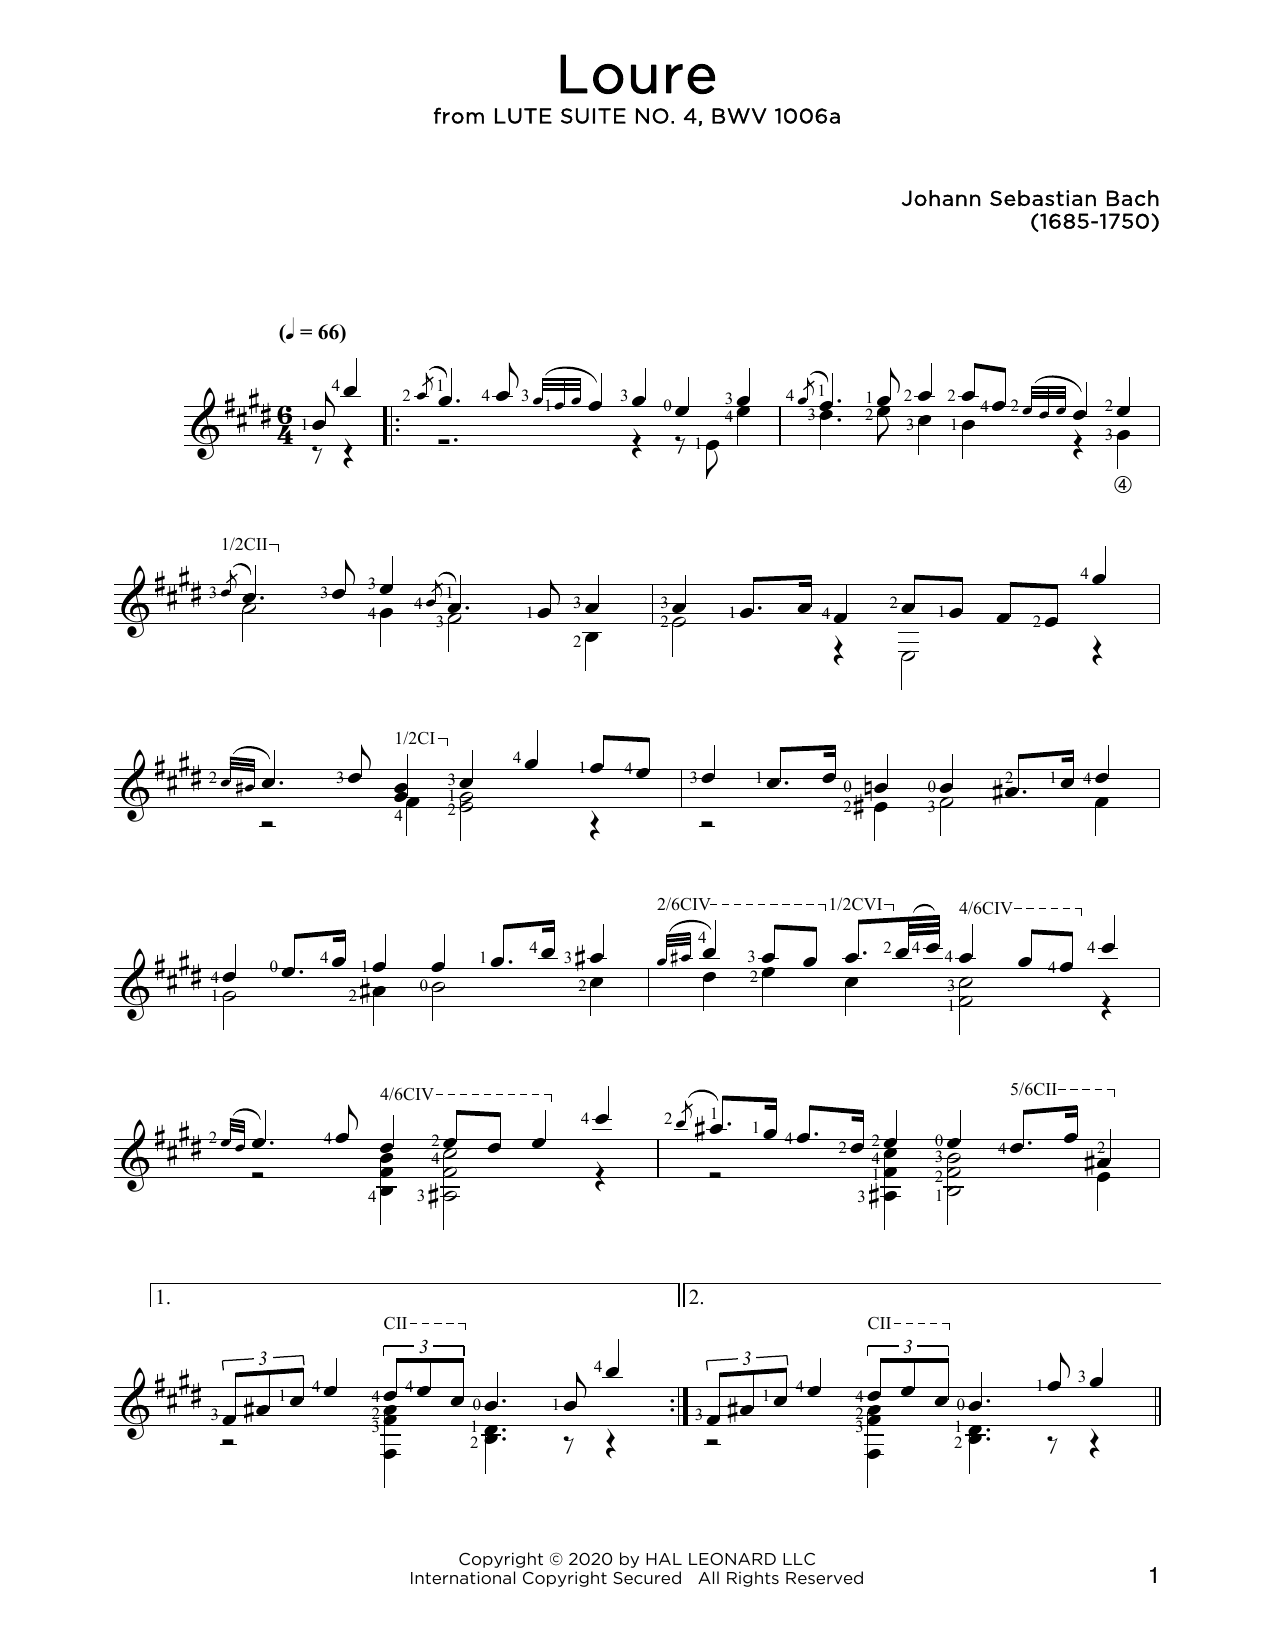 Johann Sebastian Bach Loure Sheet Music Notes & Chords for Solo Guitar - Download or Print PDF